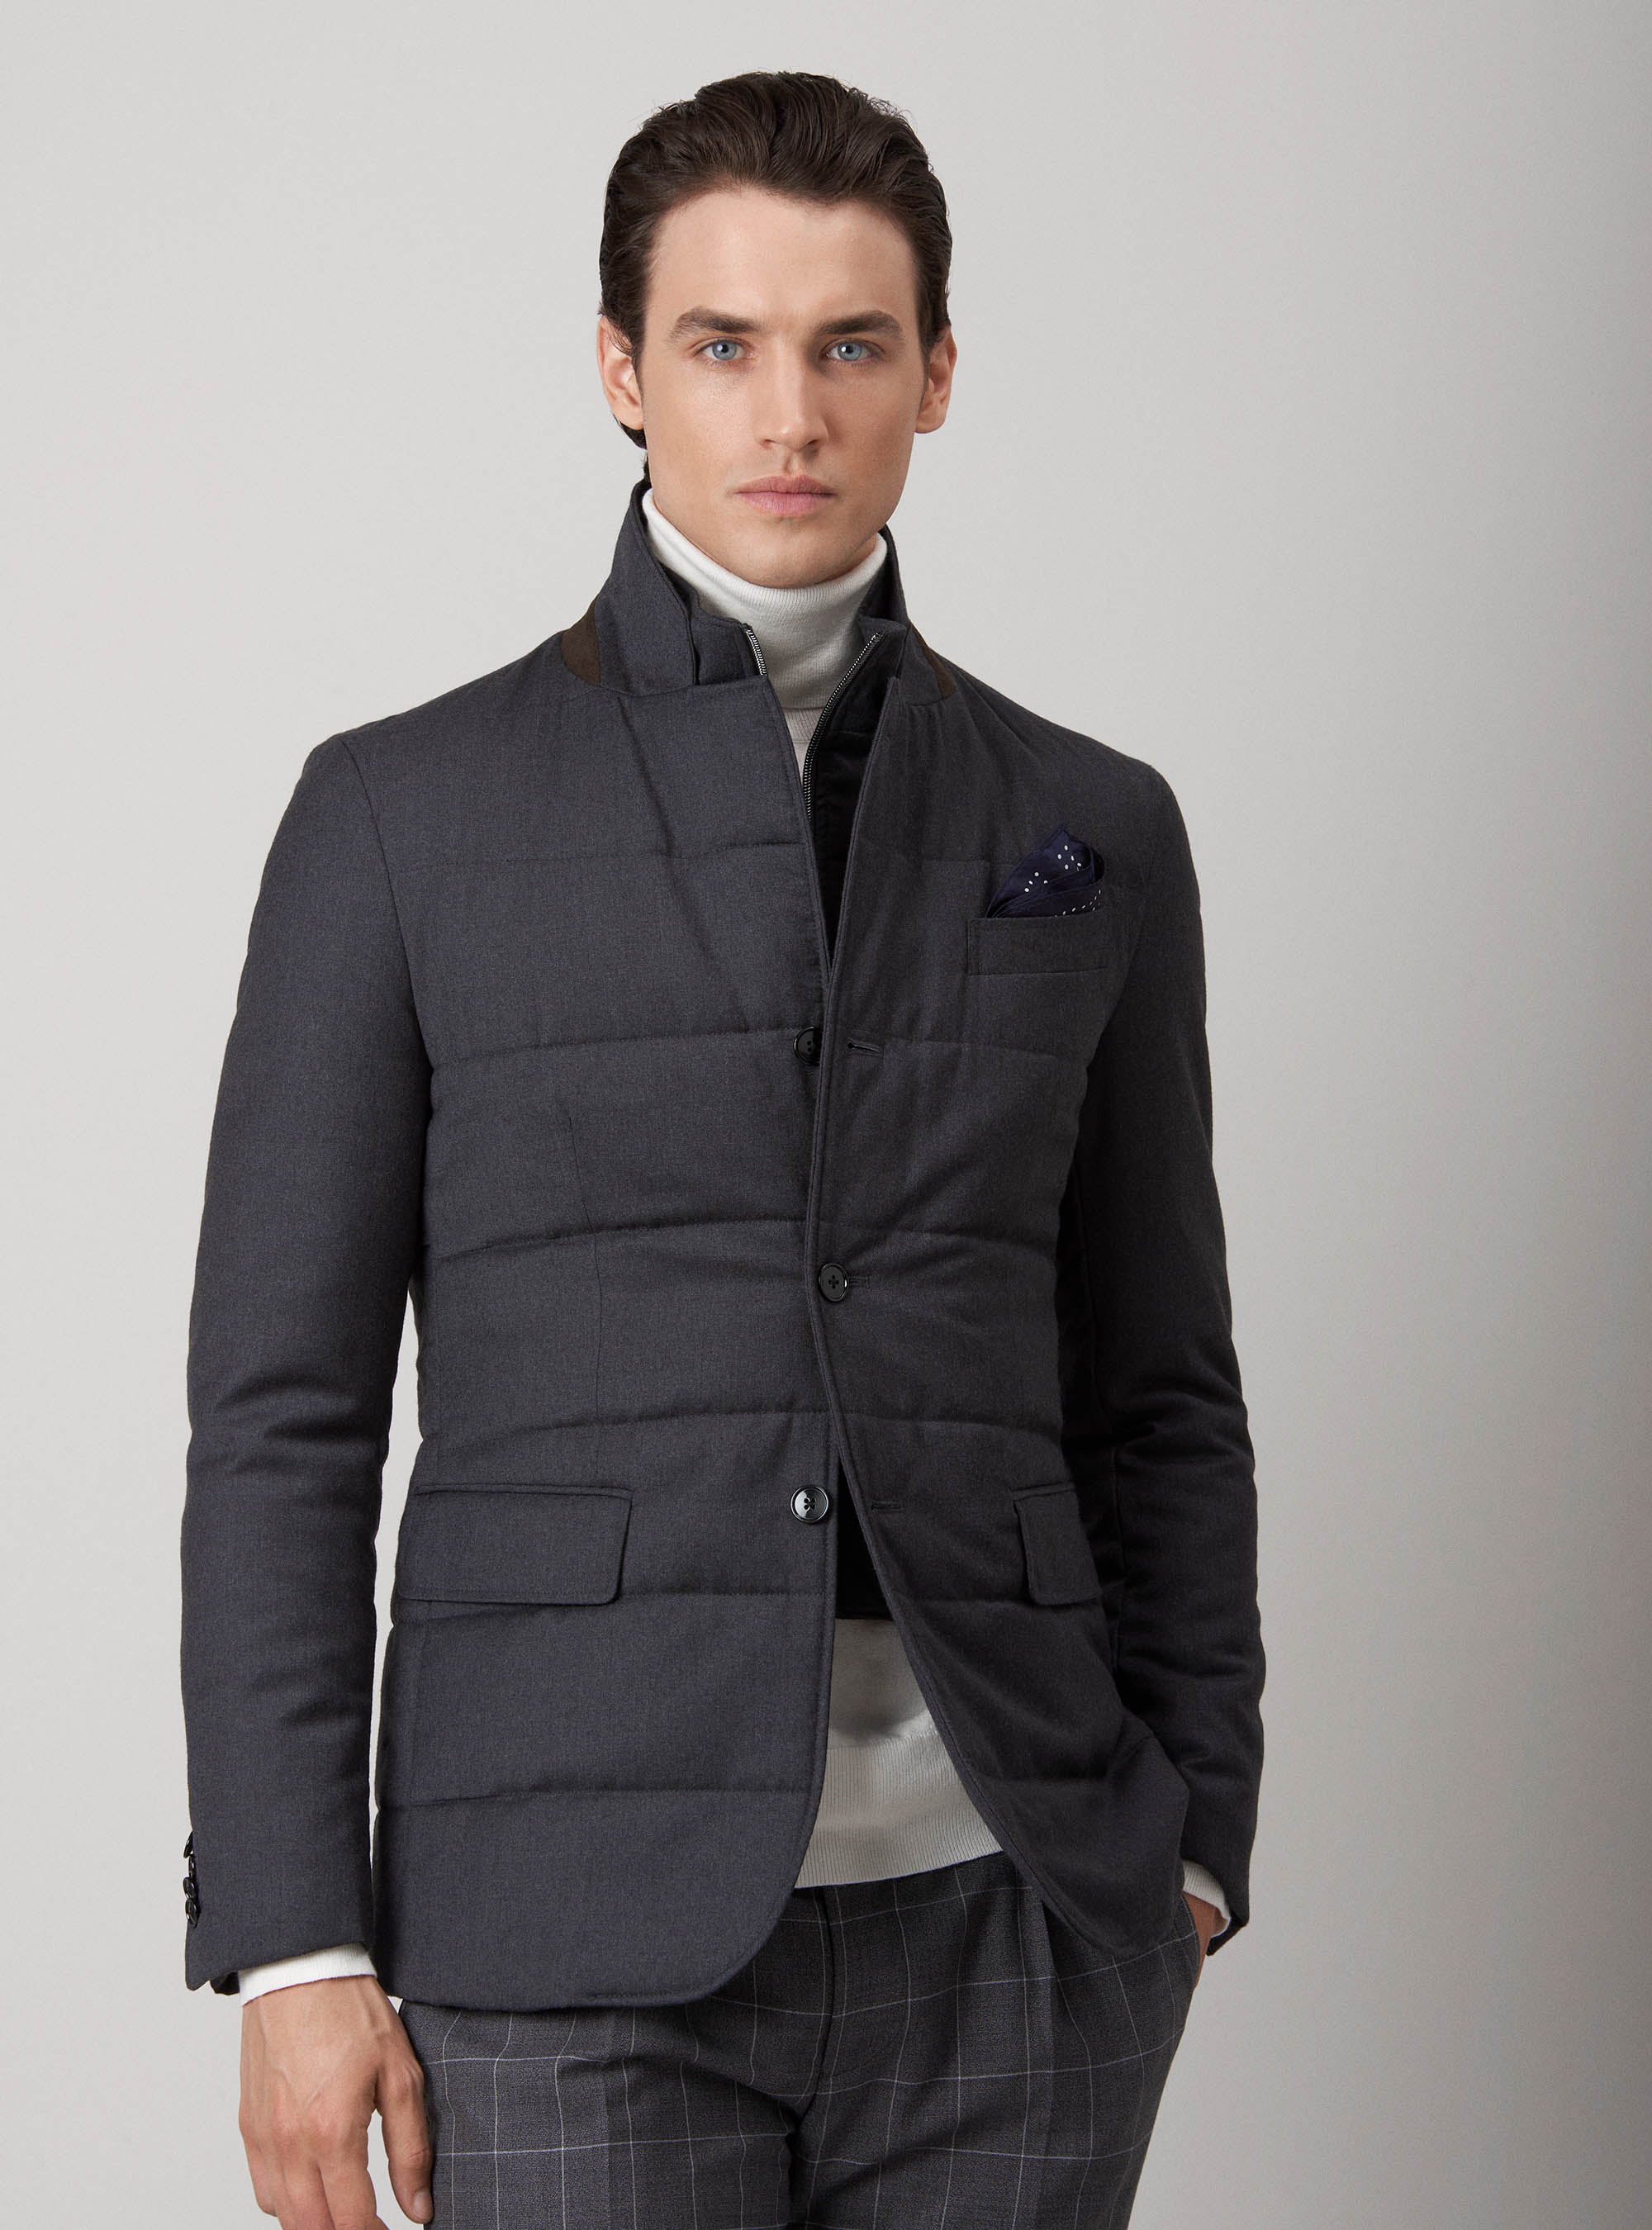 Padded blazer jacket with waistcoat